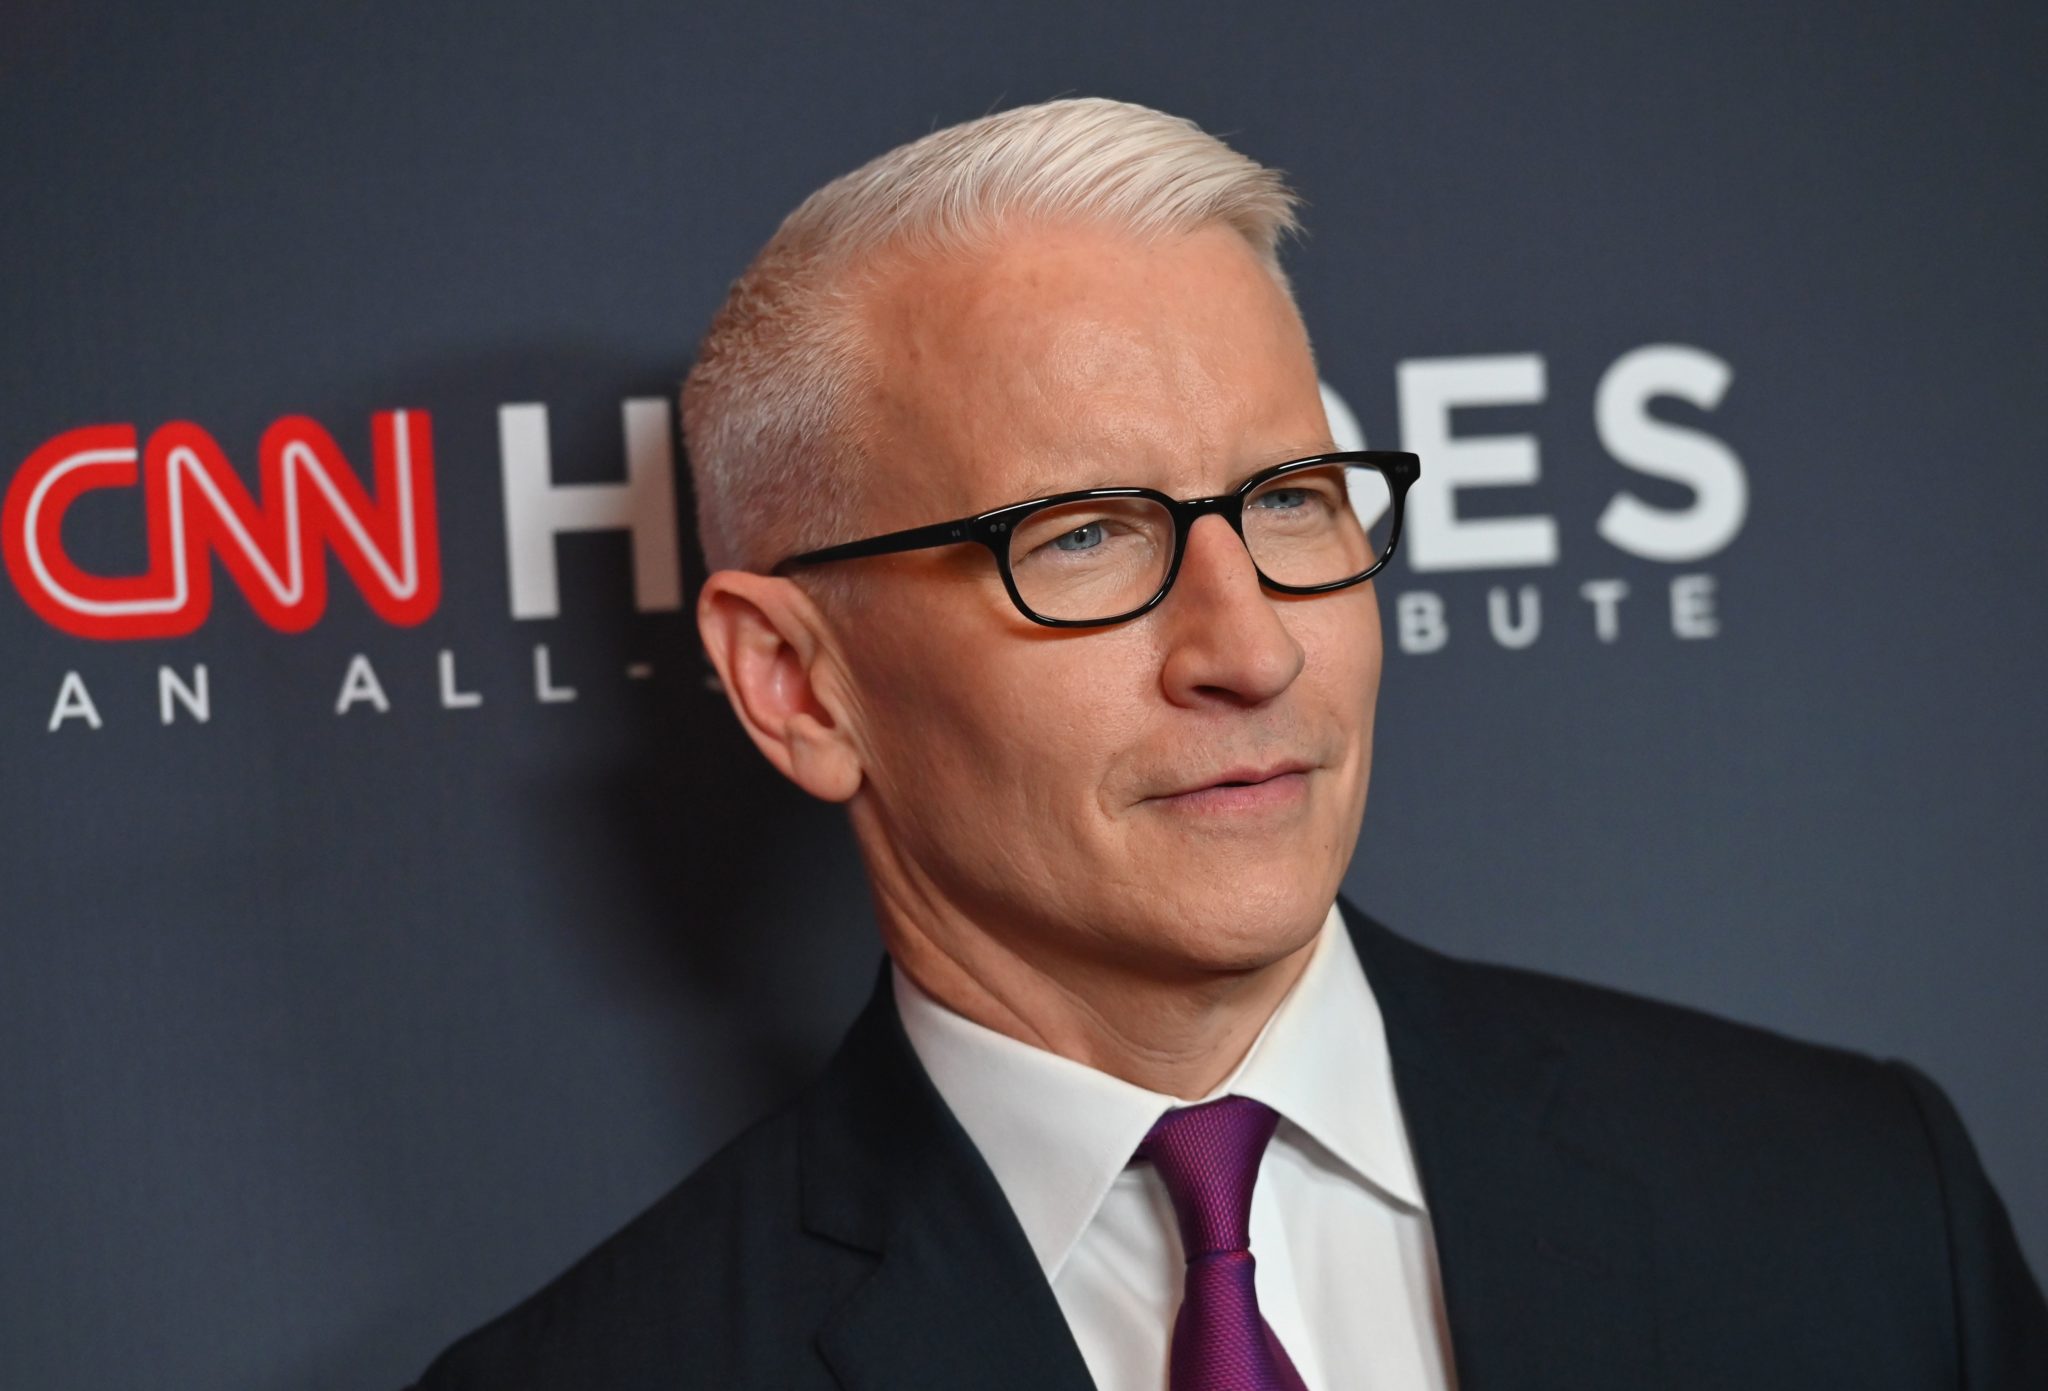 CNN anchor Anderson Cooper 